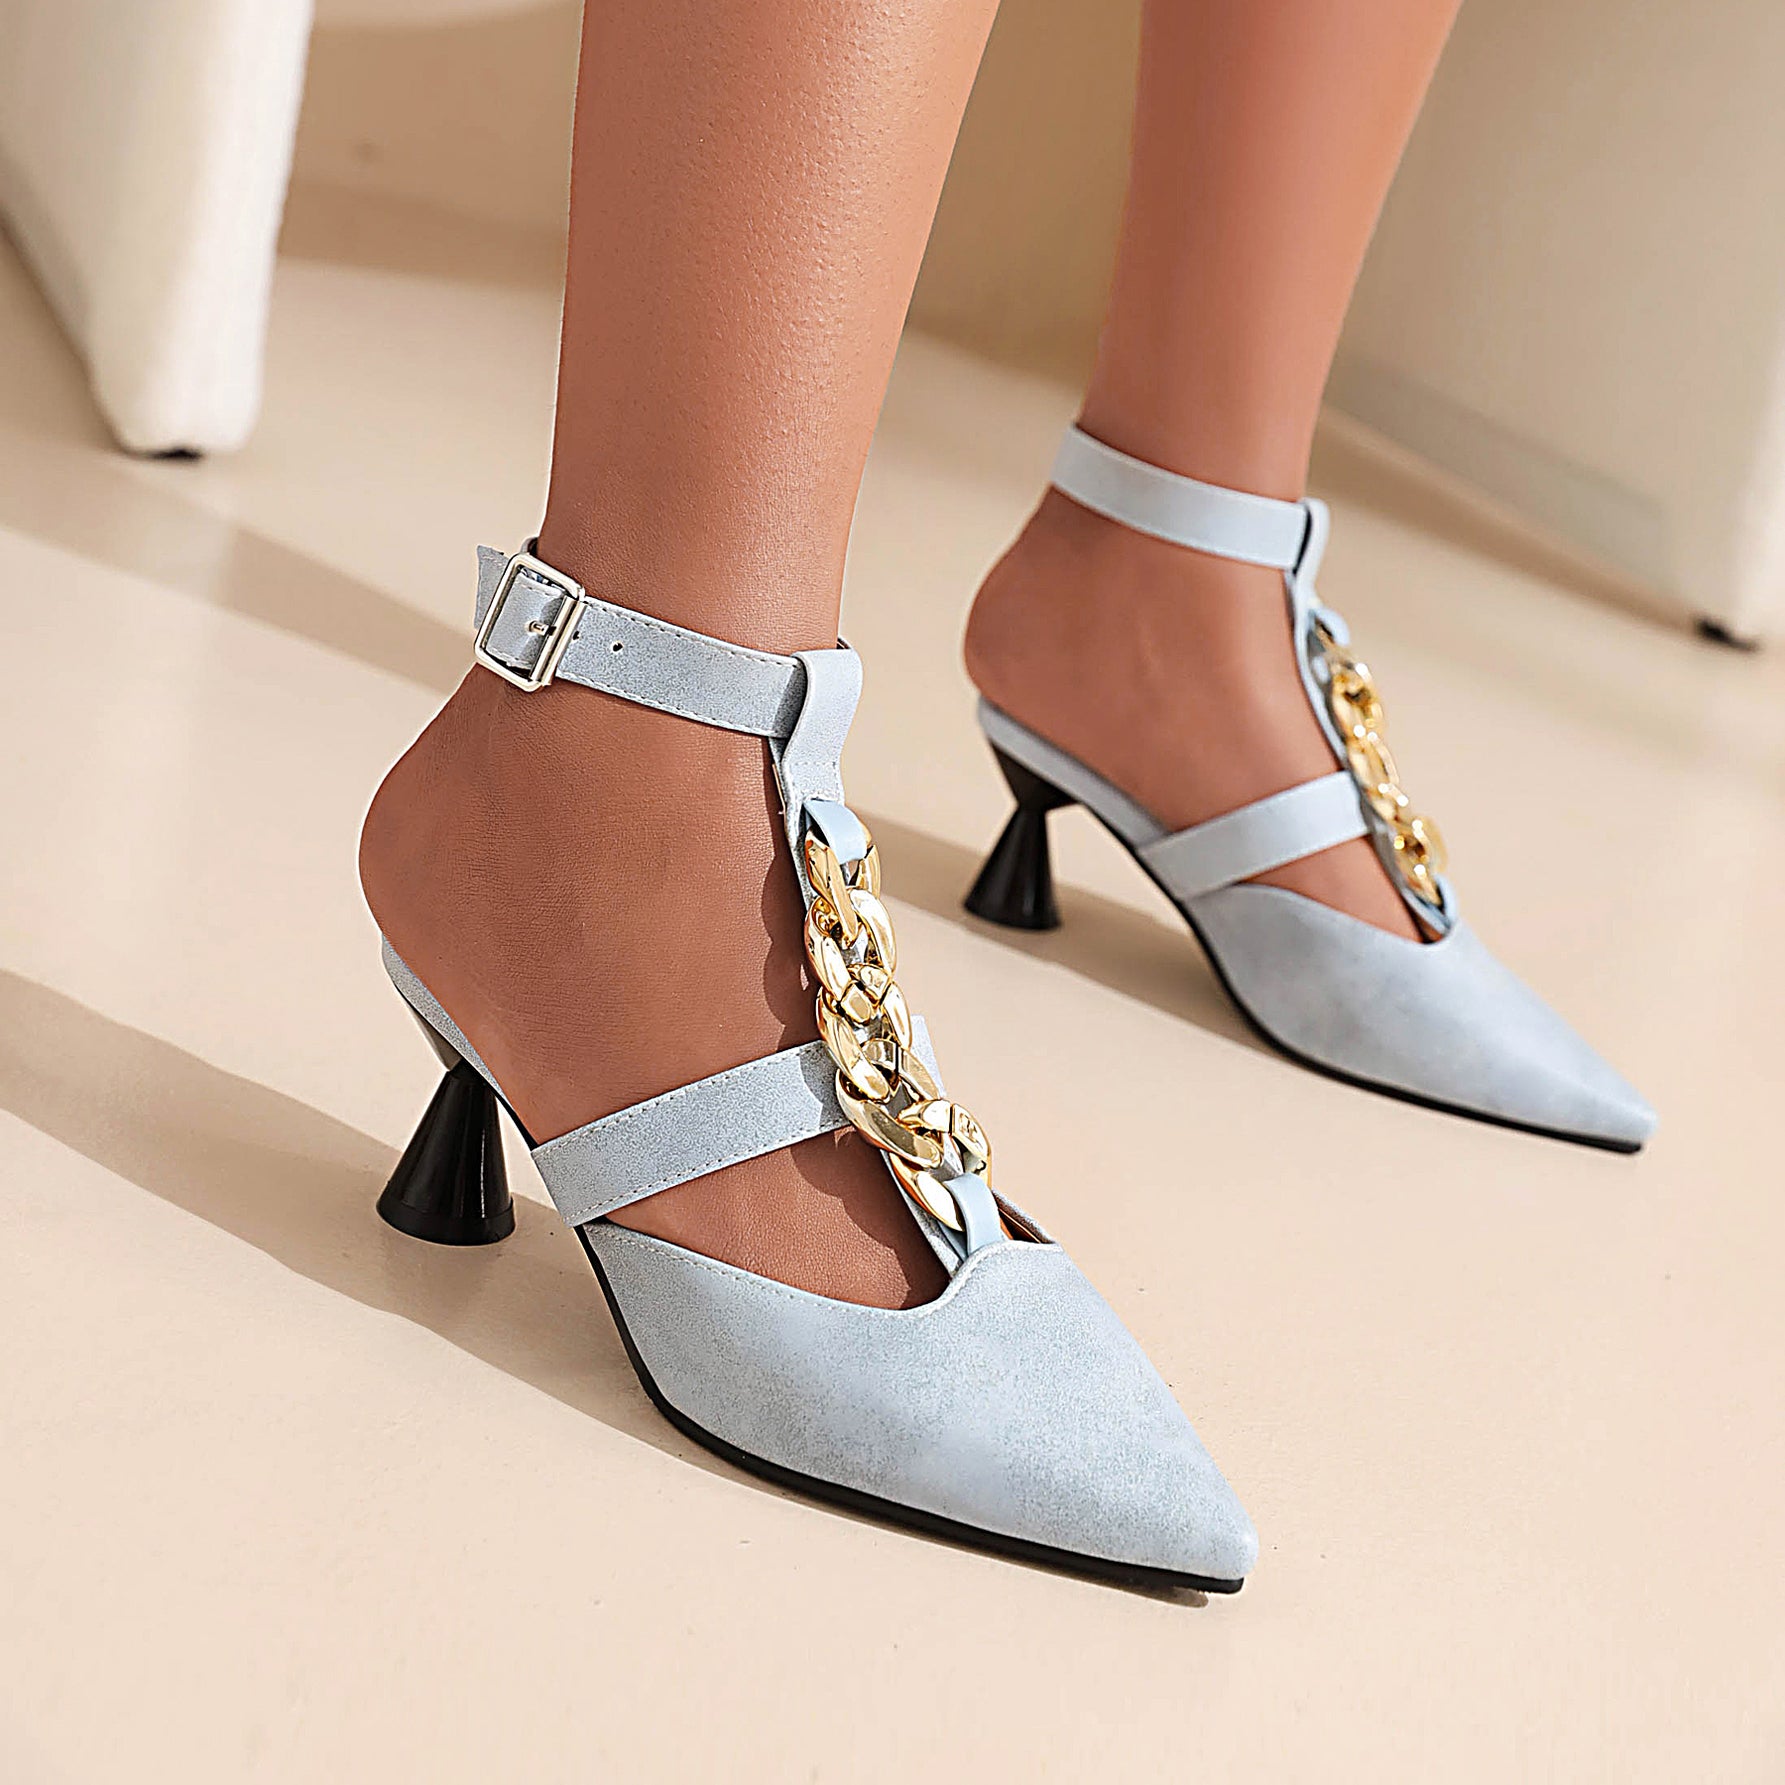 Bigsizeheels Wine Glass Heel Metal Chain Pointed Toe Sandals - Light blue best oversized womens heels from bigsizeheel®